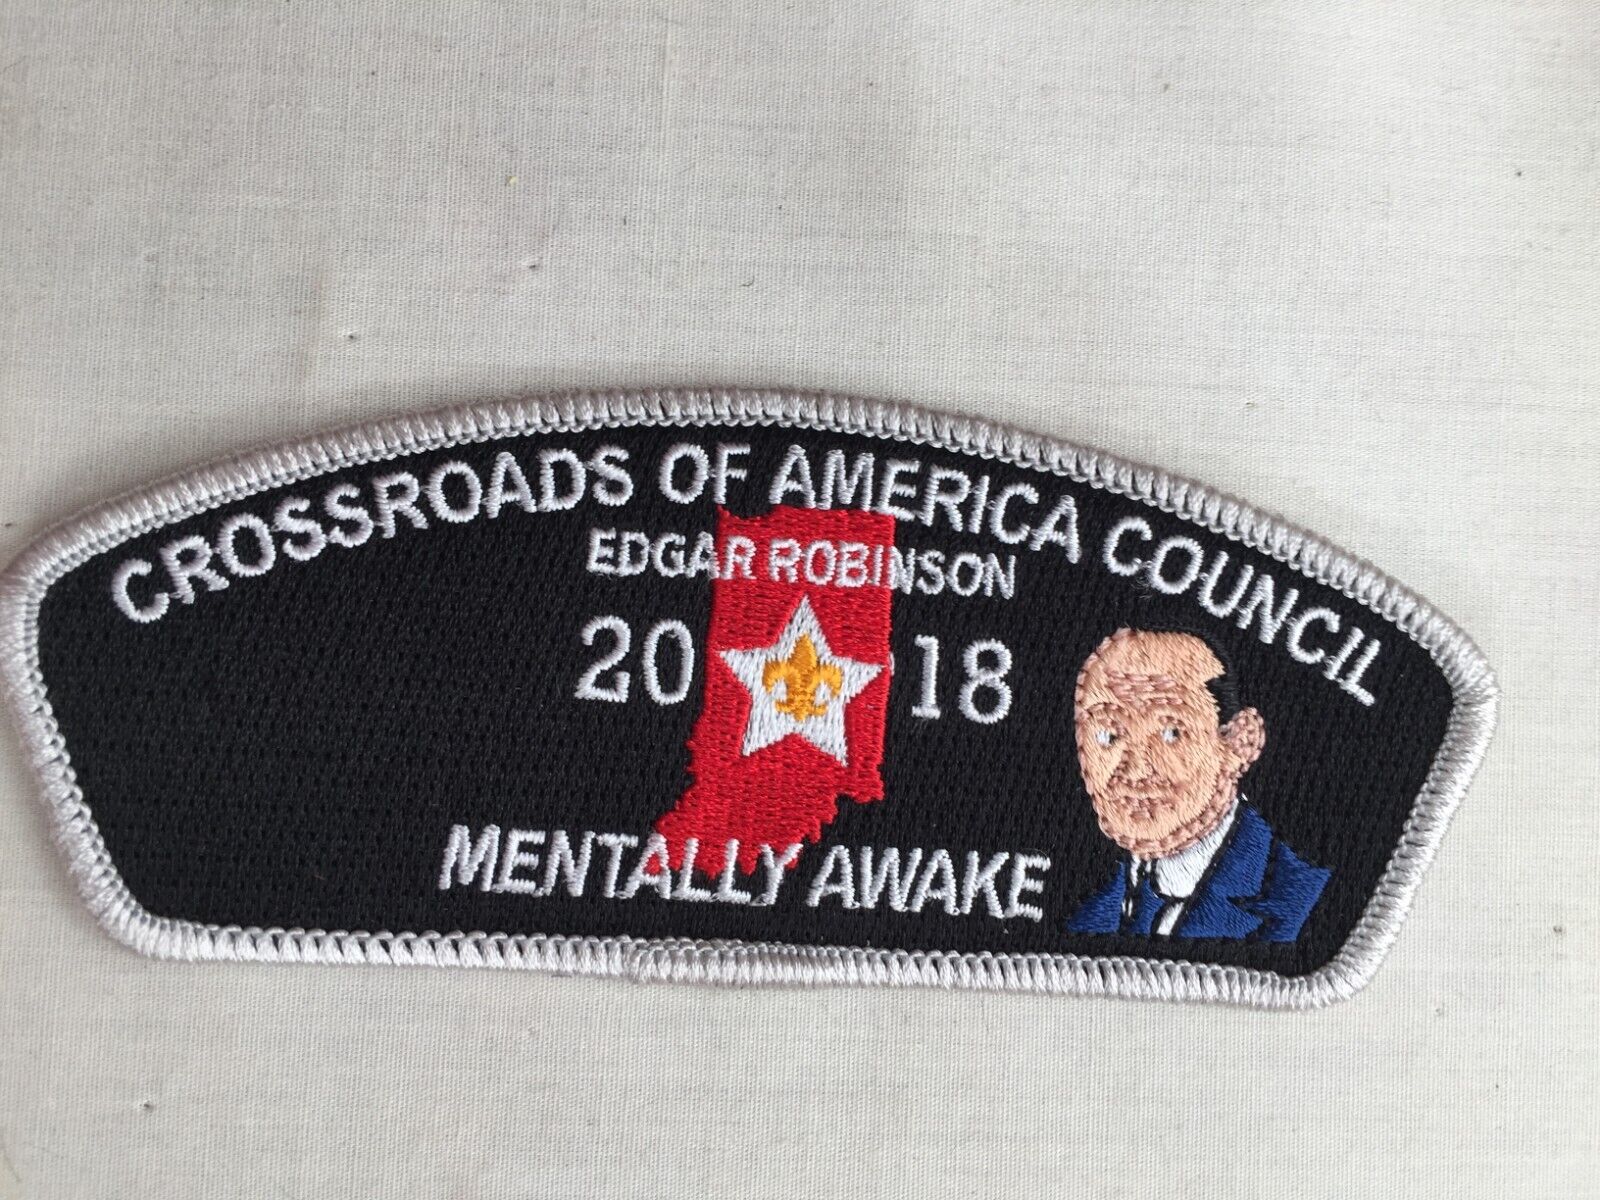 2018 Crossroads of America Council 2018 FOS Edgar Robinson BSA CSP Patch